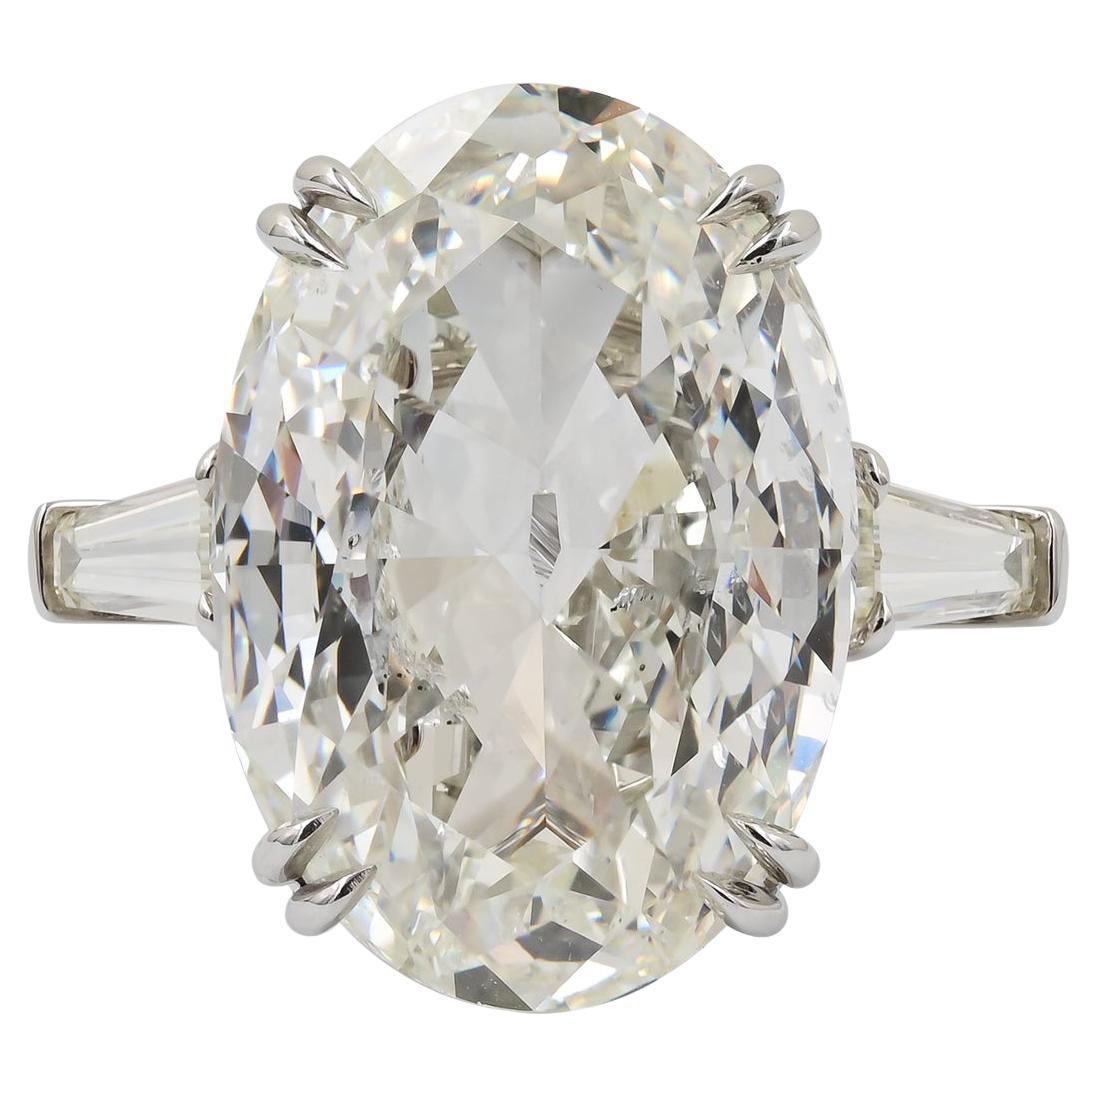 Spectra Fine Jewelry, bague de fiançailles avec diamant ovale certifié GIA de 20.07 carats